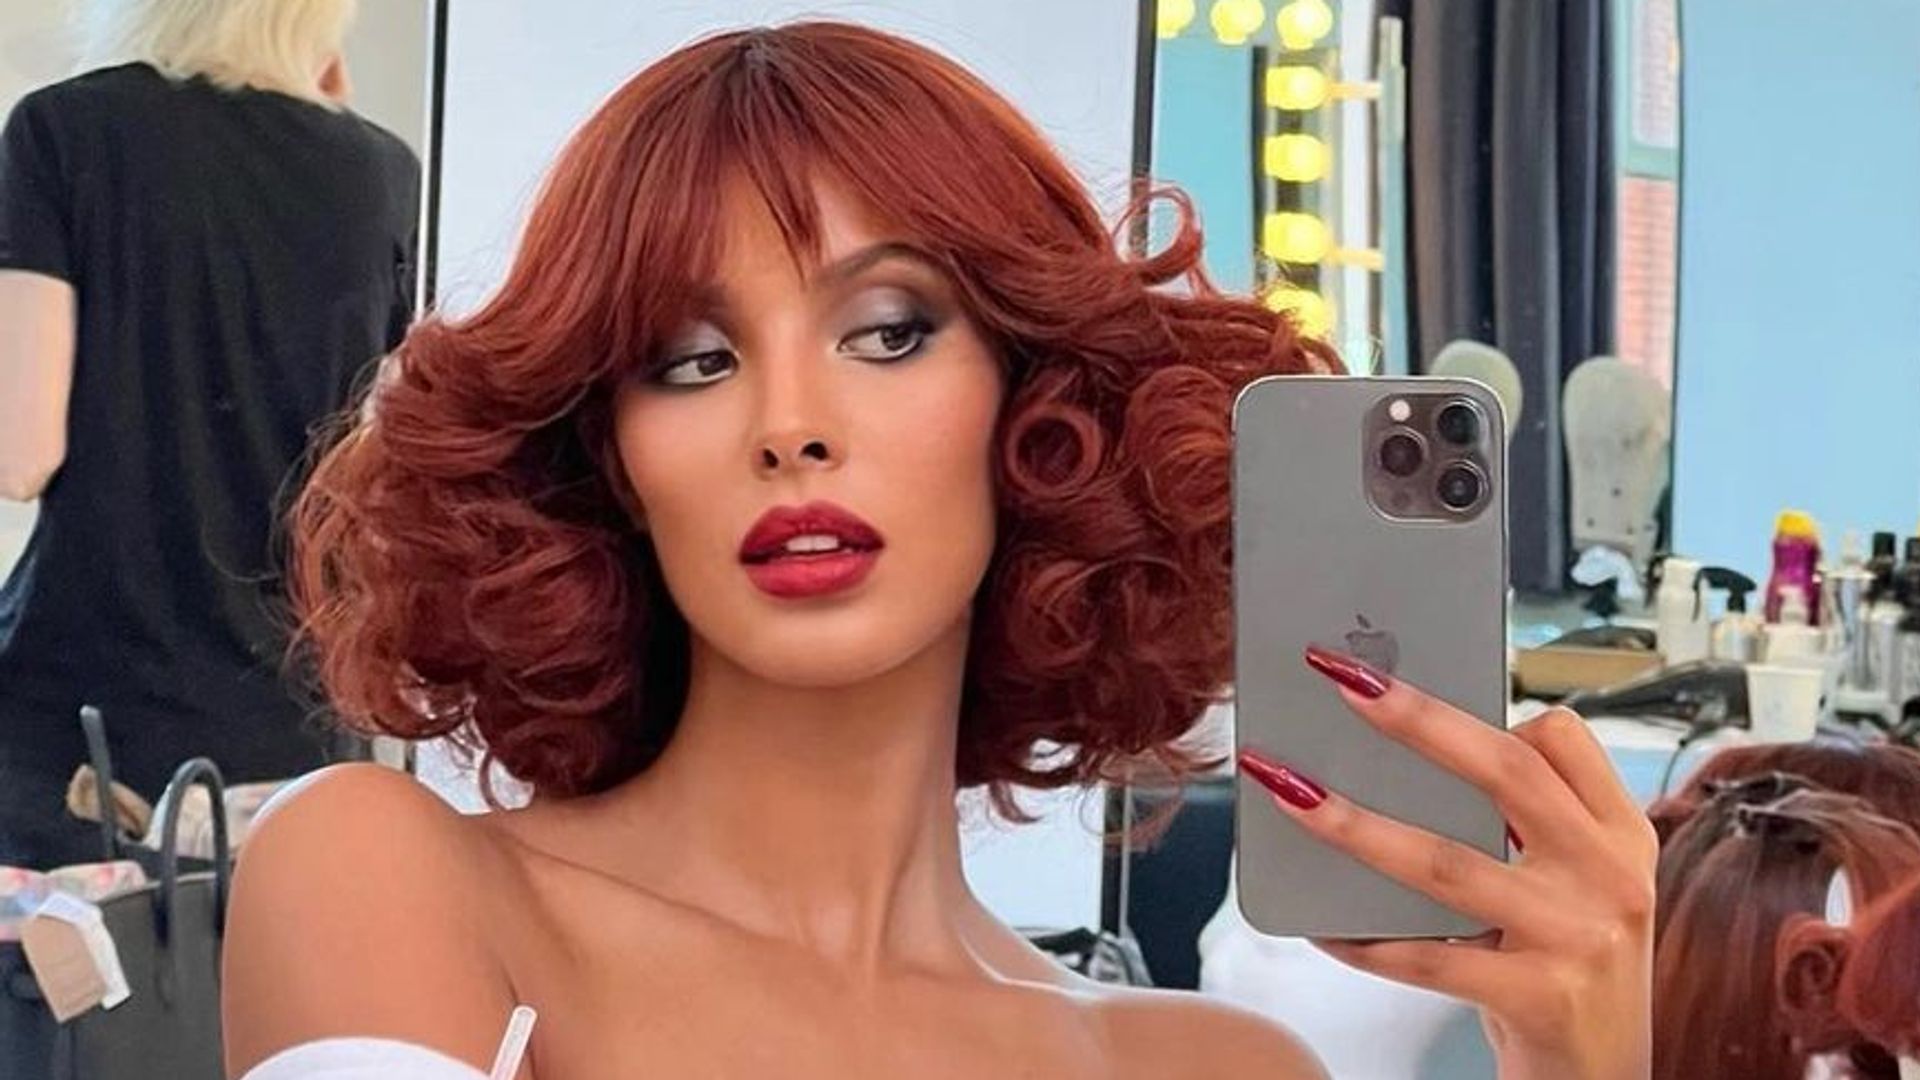 Maya Jama takes a mirror selfie with red hair